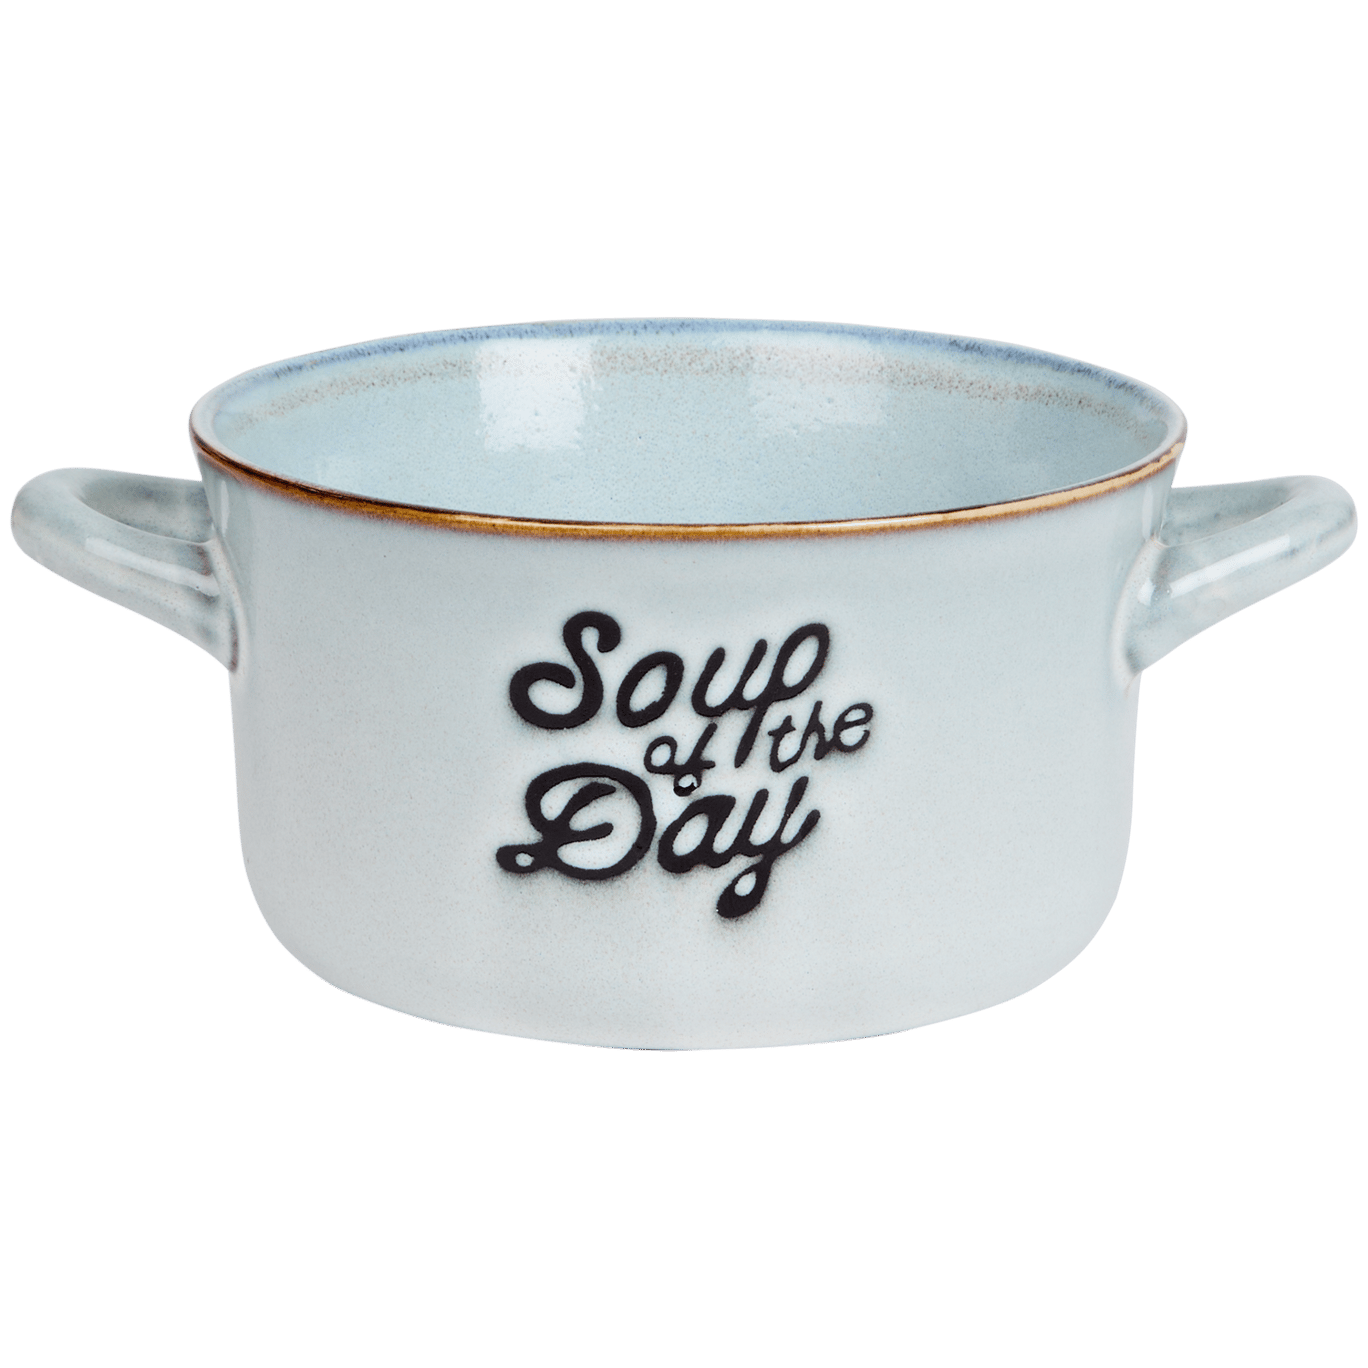 Suppenschüssel aus Keramik